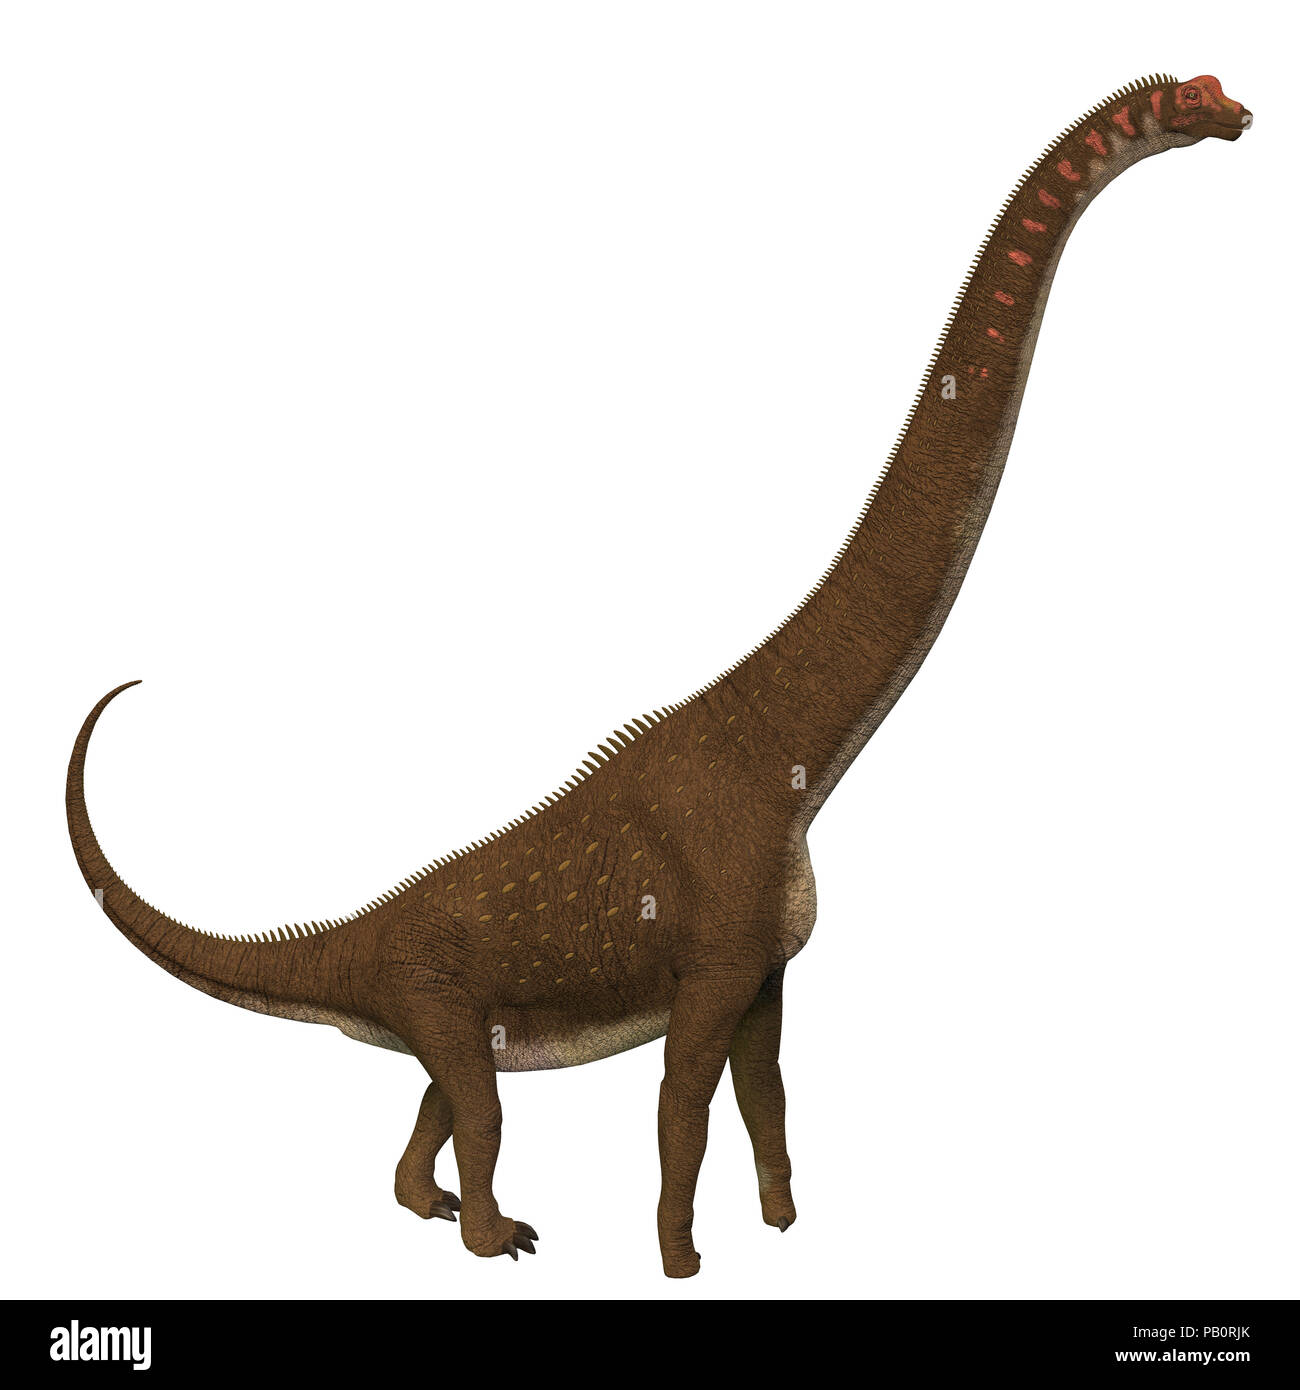 Giraffatitan Dinosaur Side Profile - Giraffatitan was a herbivorous sauropod dinosaur that lived in Africa during the Jurassic Period. Stock Photo